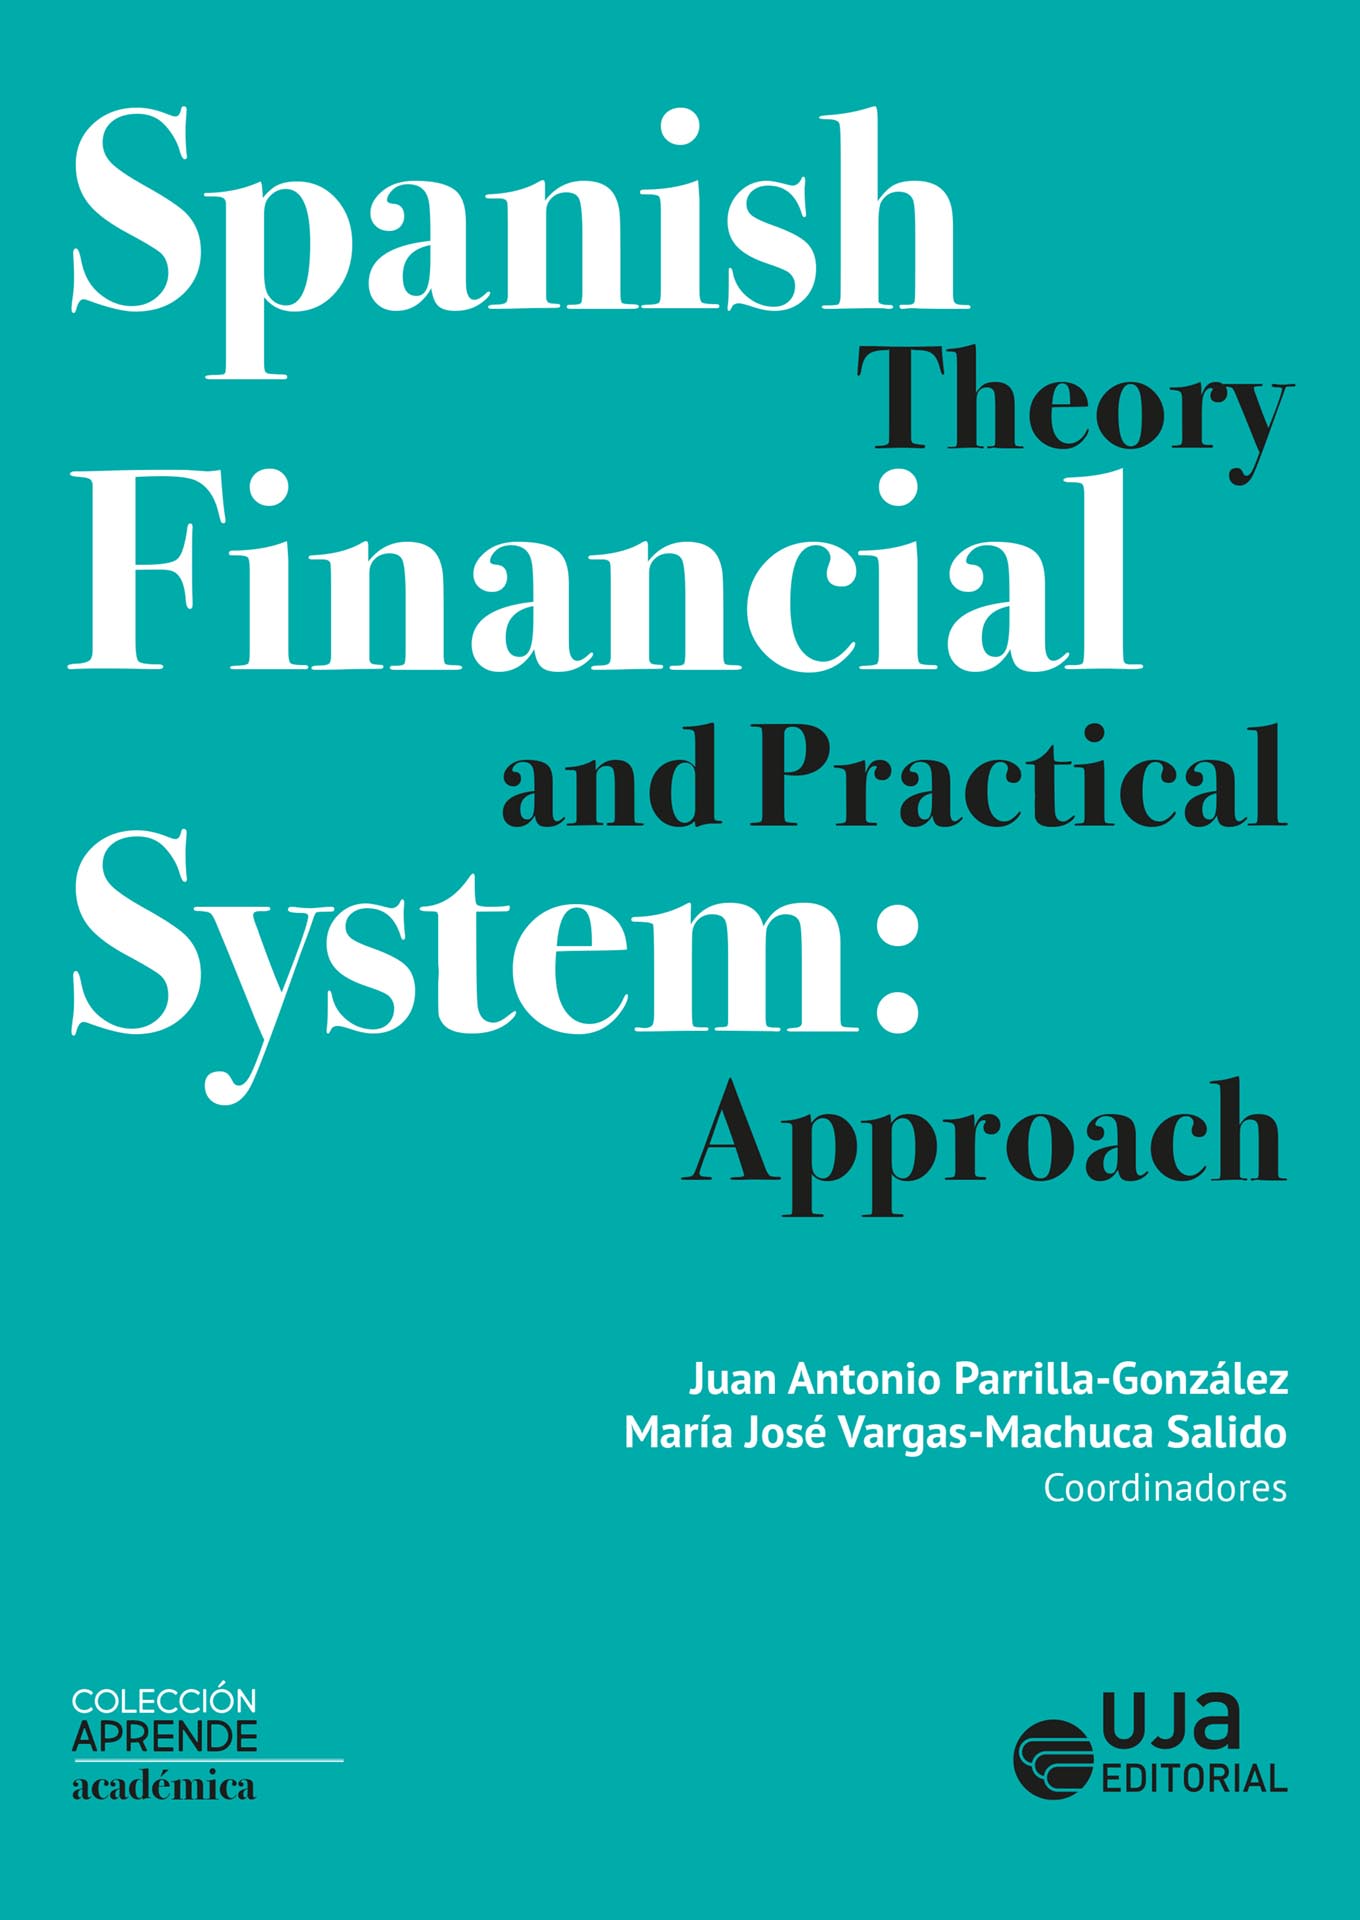 Spanish Financial System